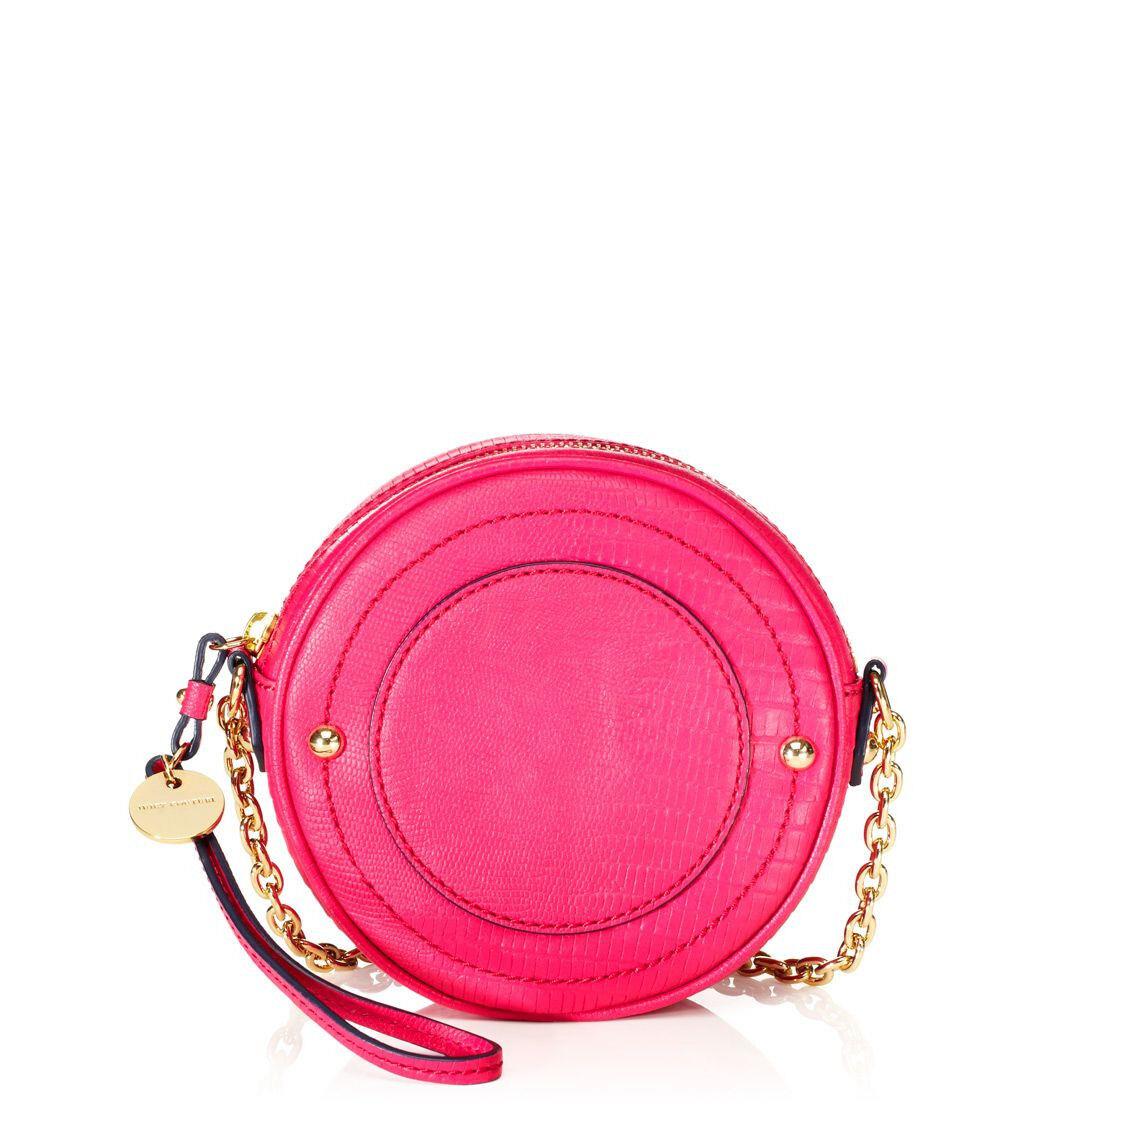 Juicy Couture Handbags Sierra `lizard` Leather Mod Crossbody Pink/black-nwt